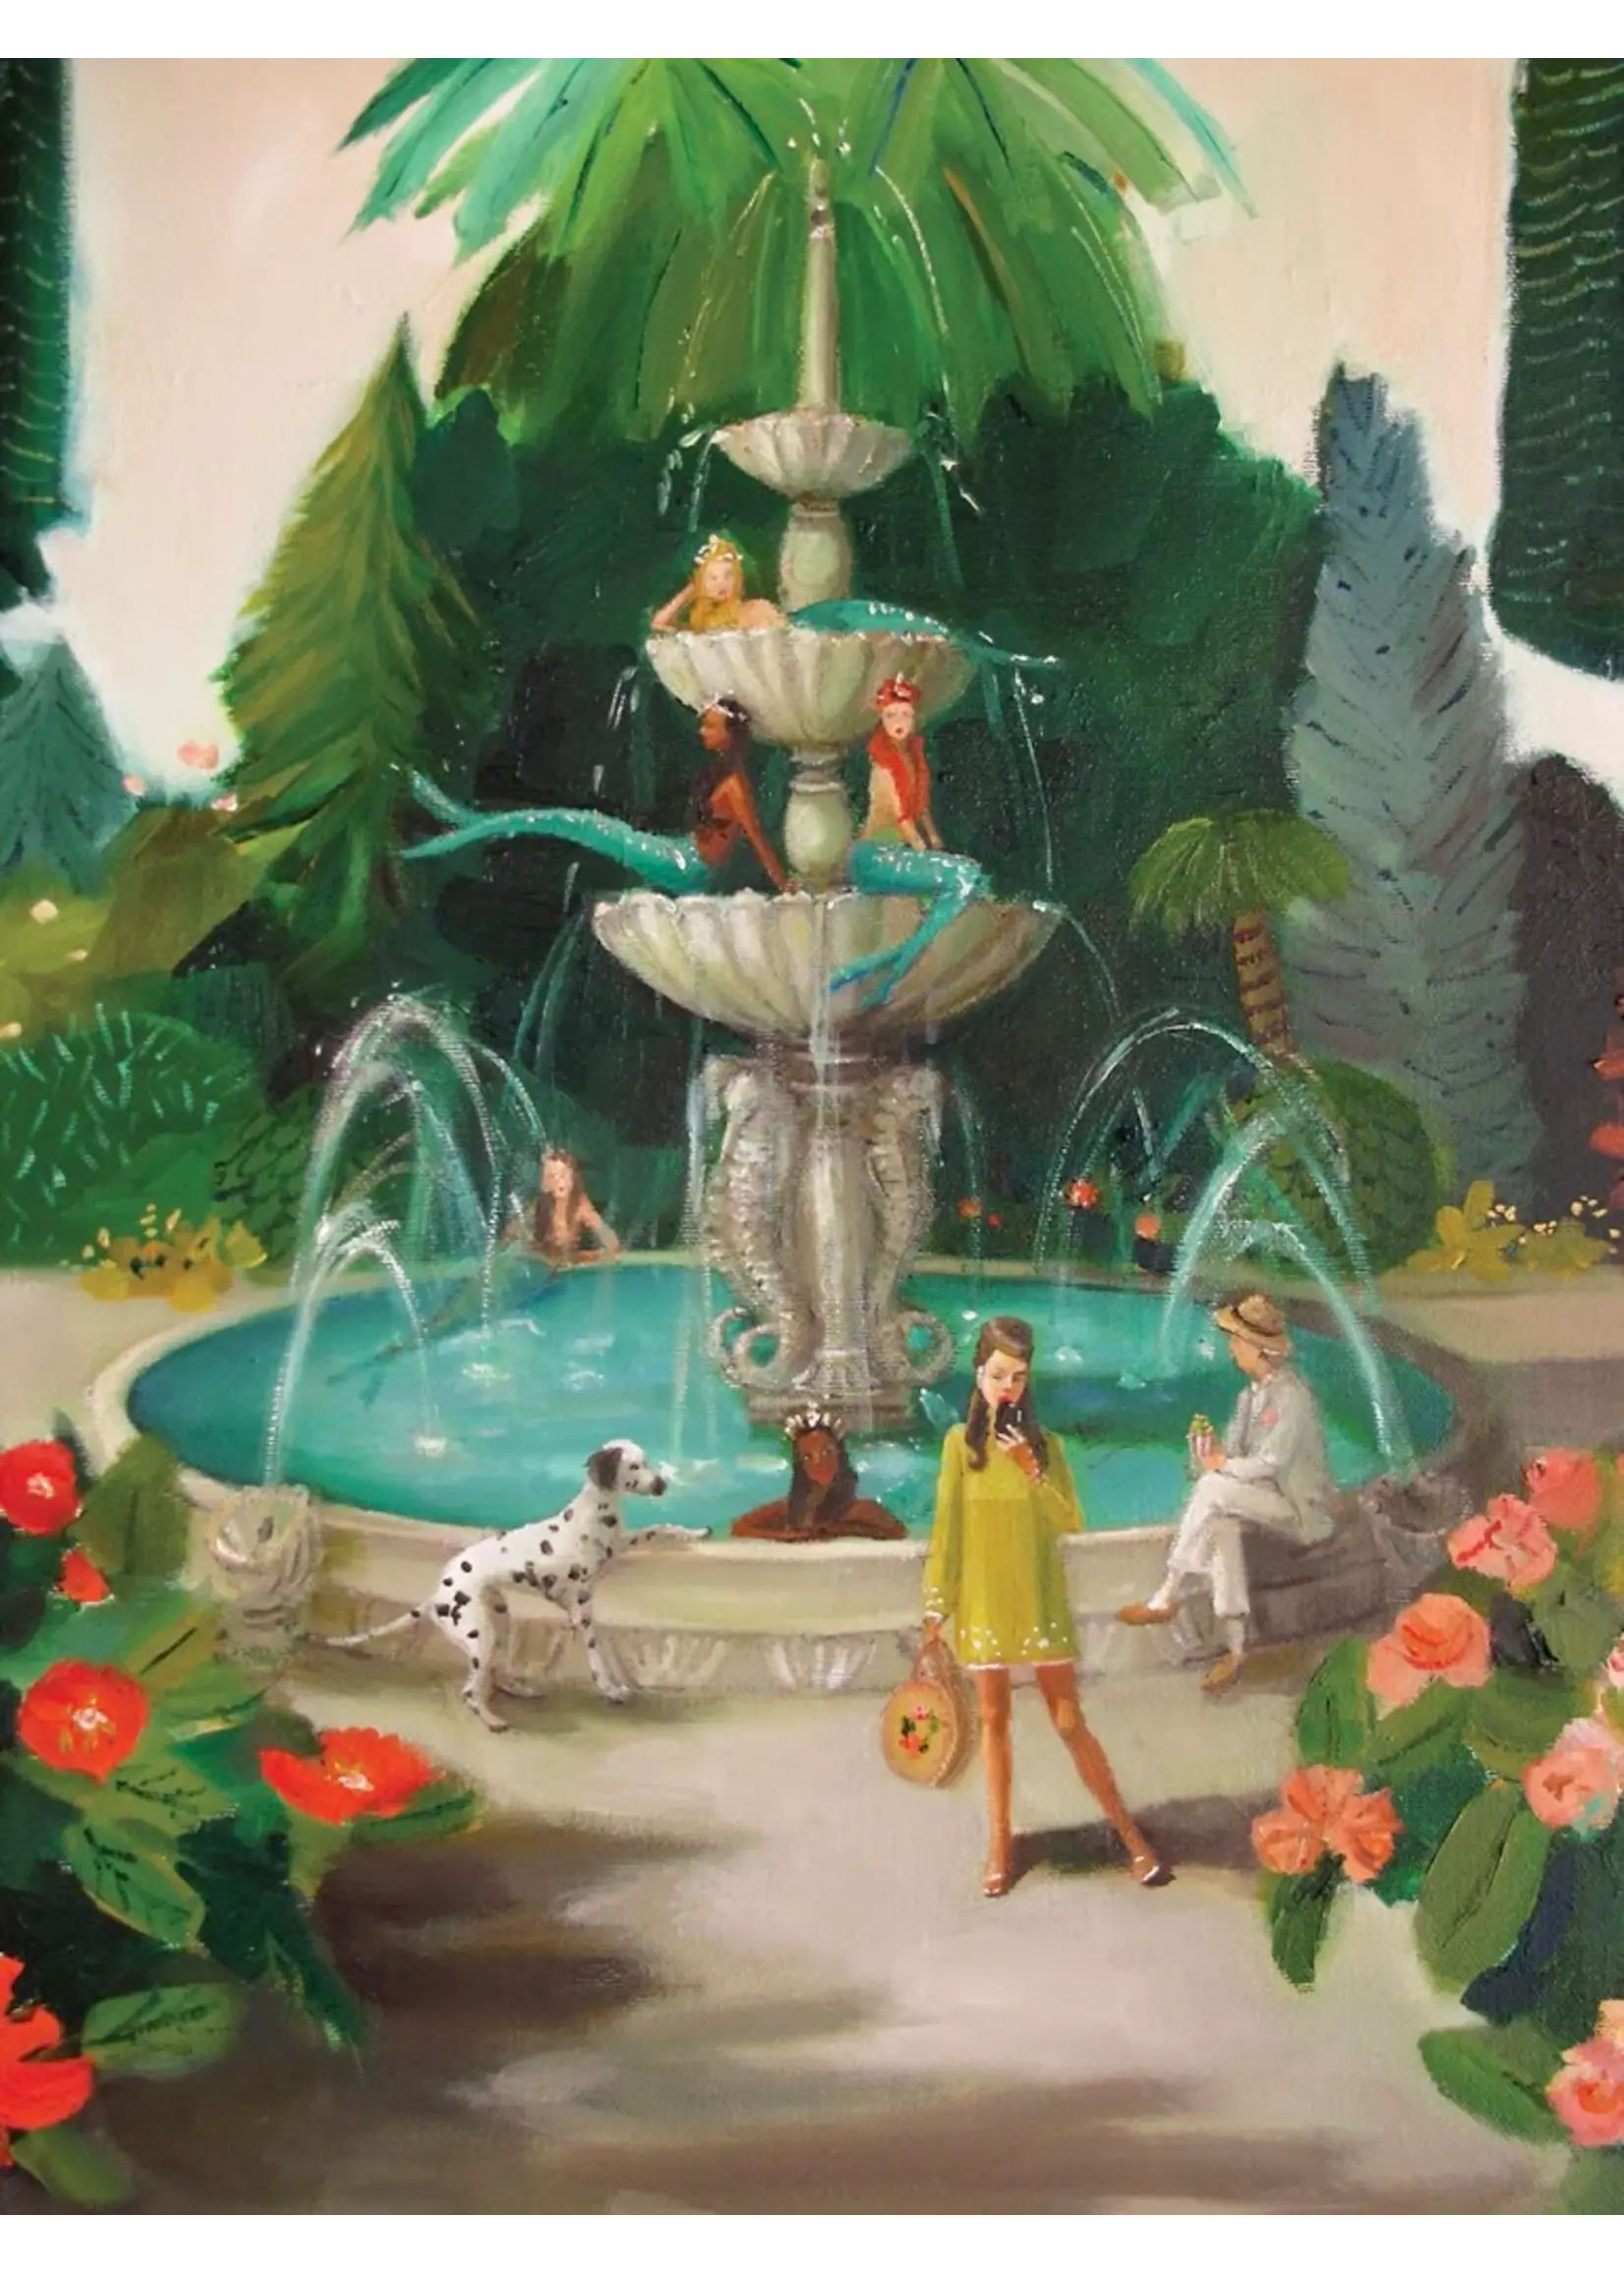 New York Puzzle Company Puzzle: Mermaid Fountain